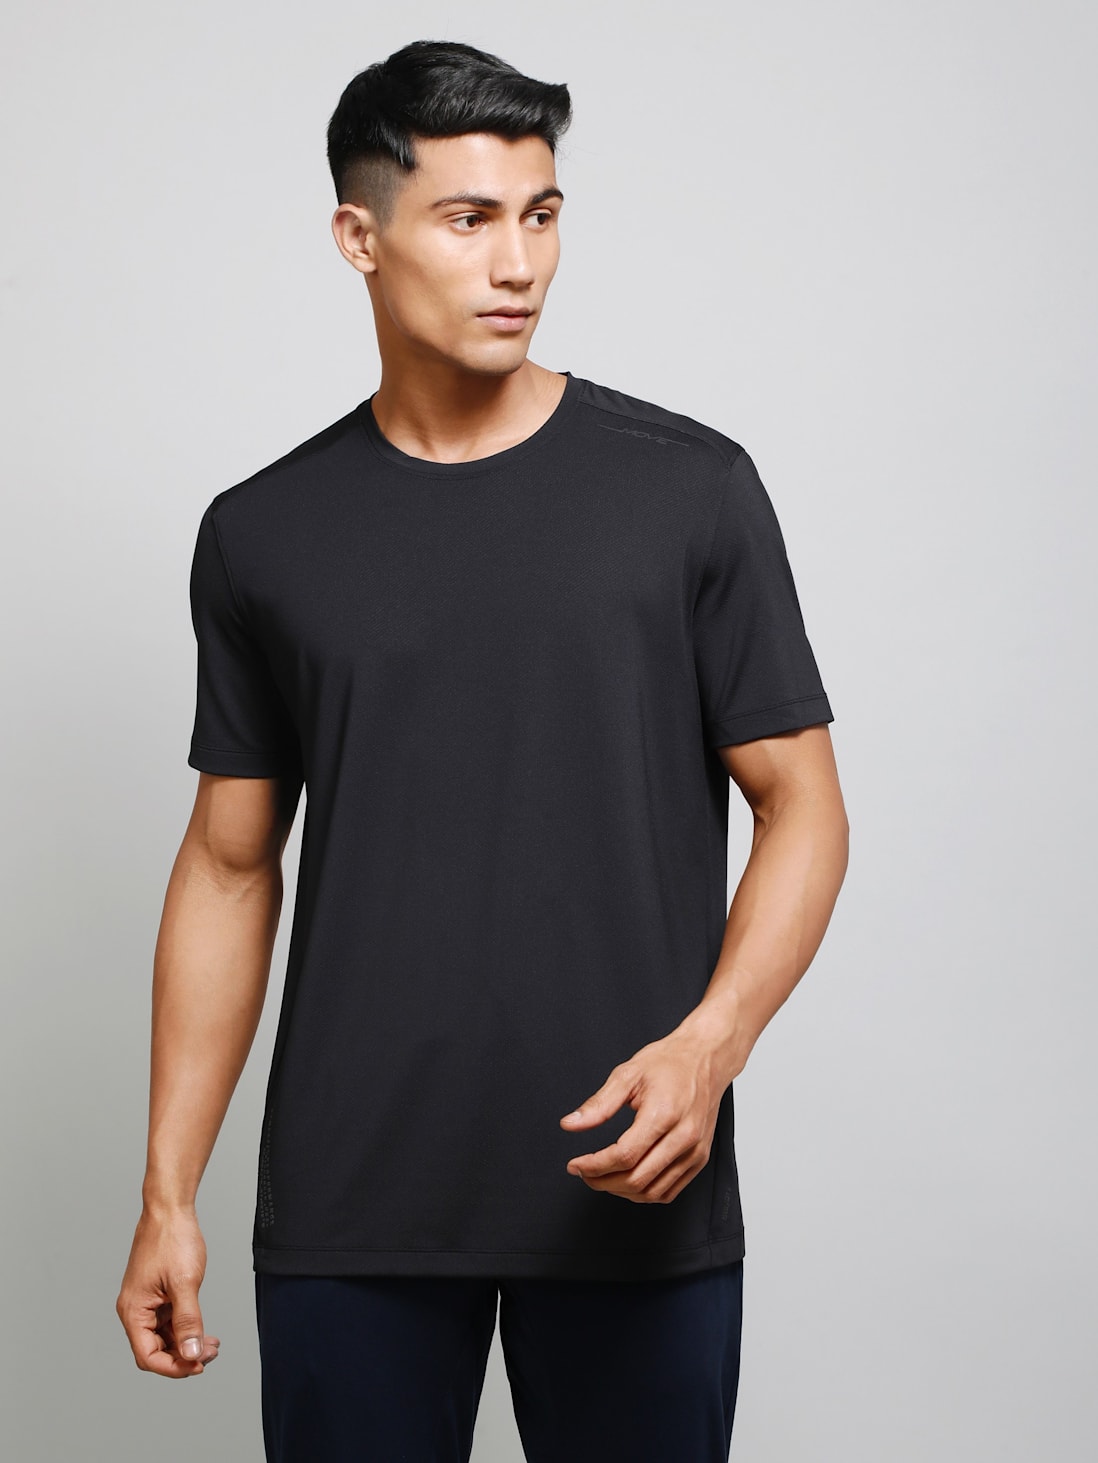 Shop JOCKEY Men's Recycled Microfiber Round Neck Half Sleeve T-Shirt